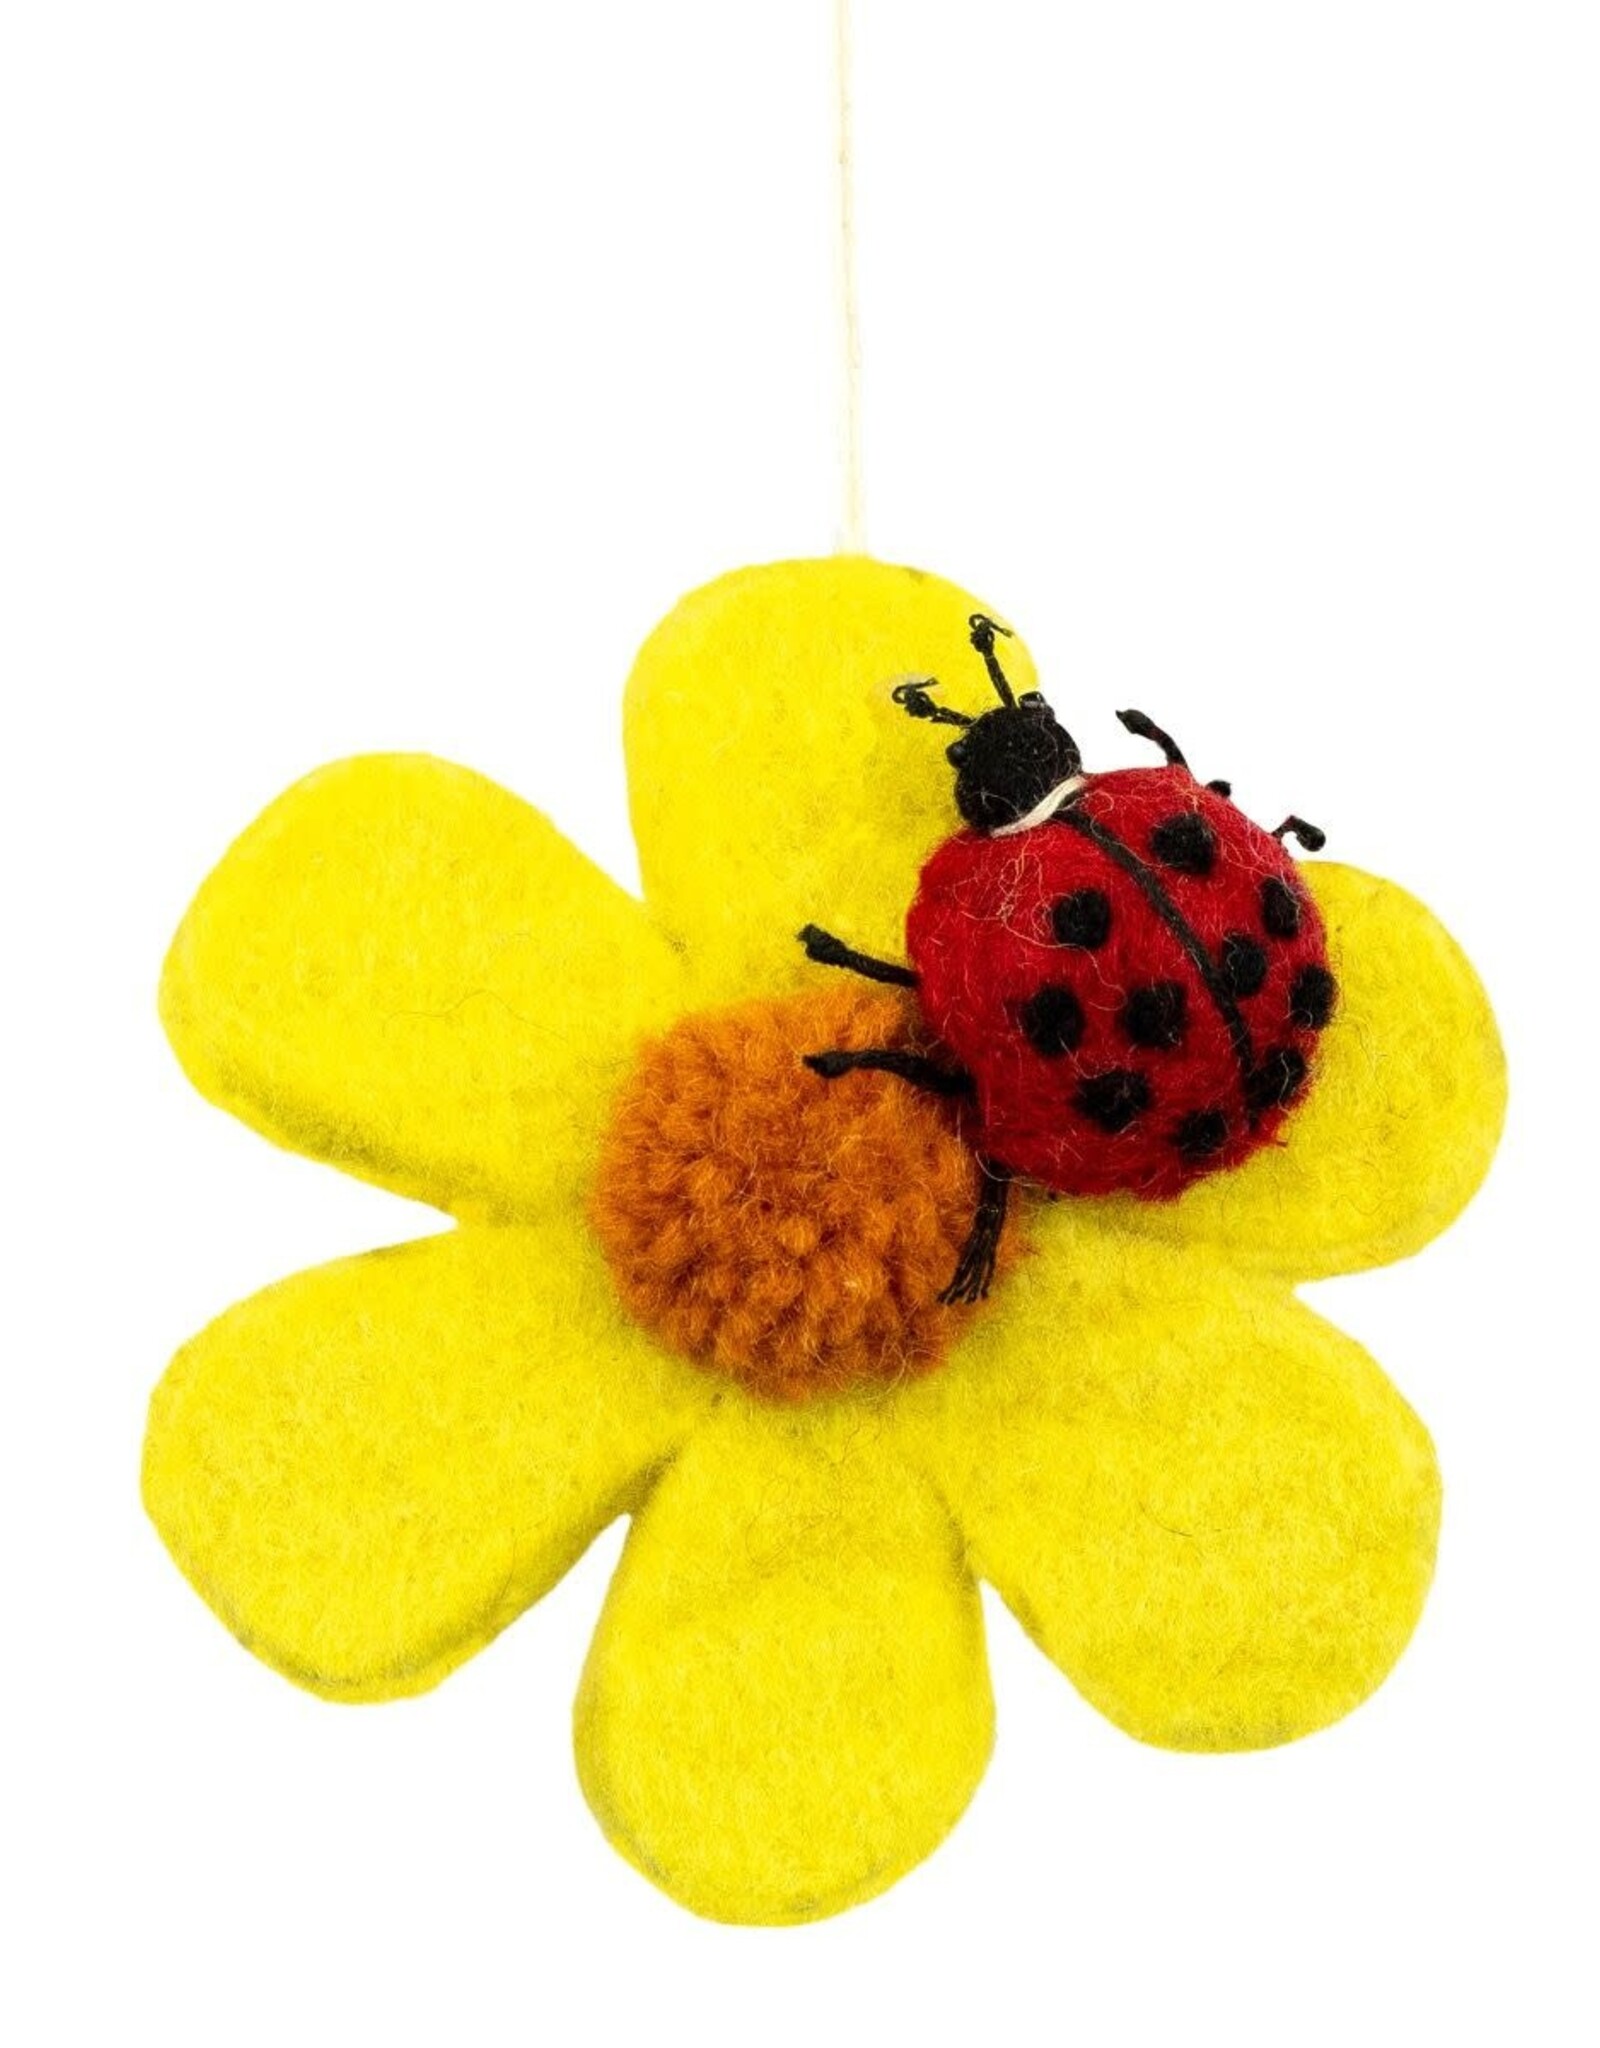 dZi Handmade Ladybug Bloom Ornament